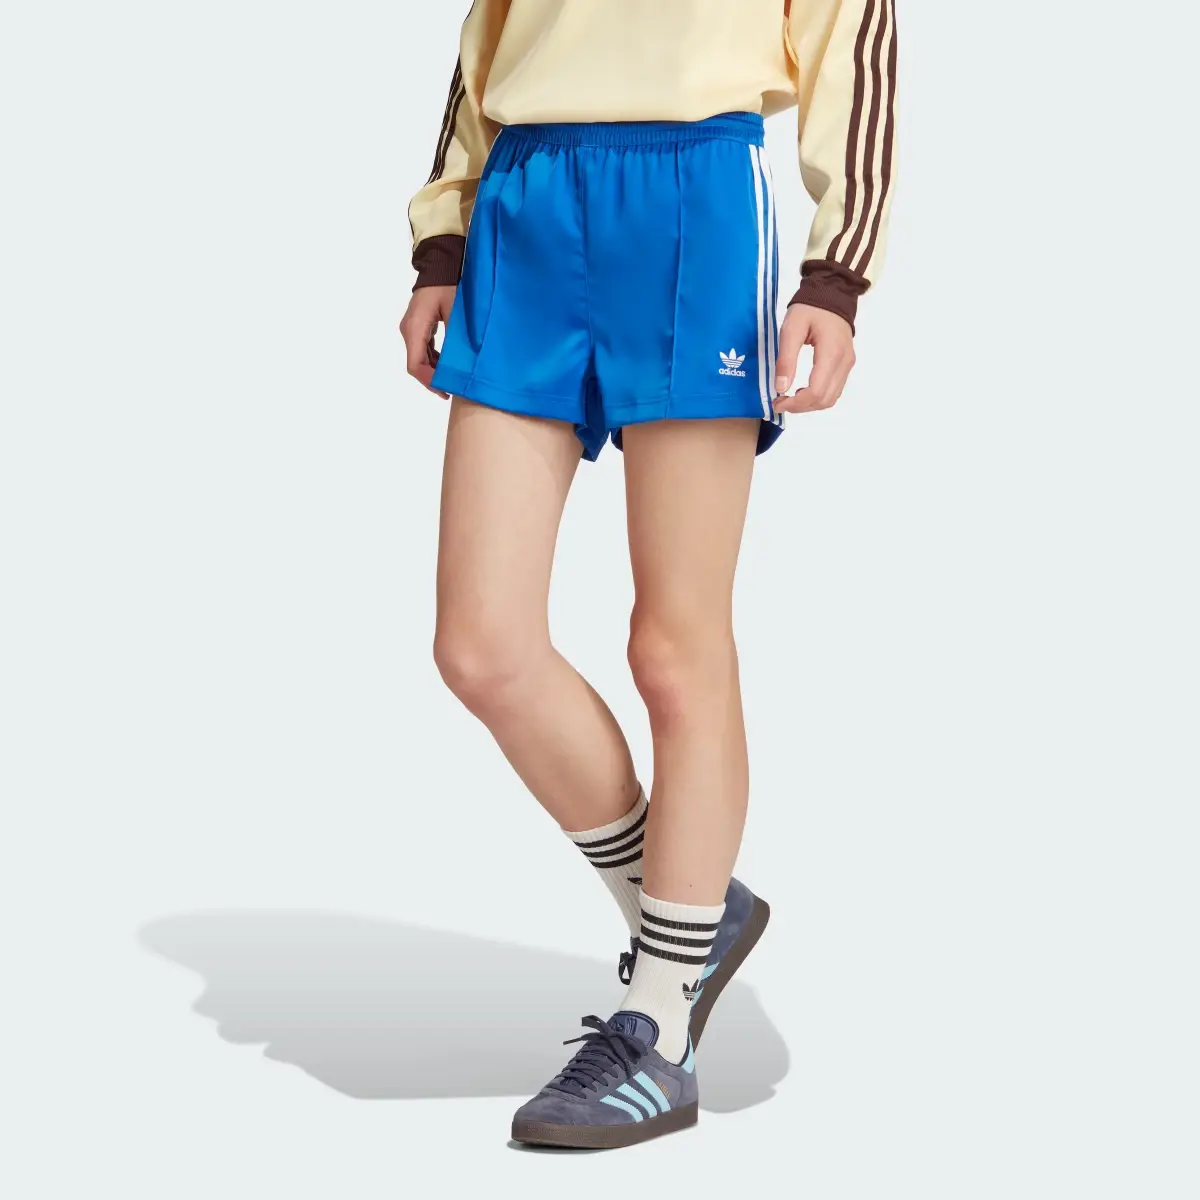 Adidas 3-Stripes Satin Shorts. 1